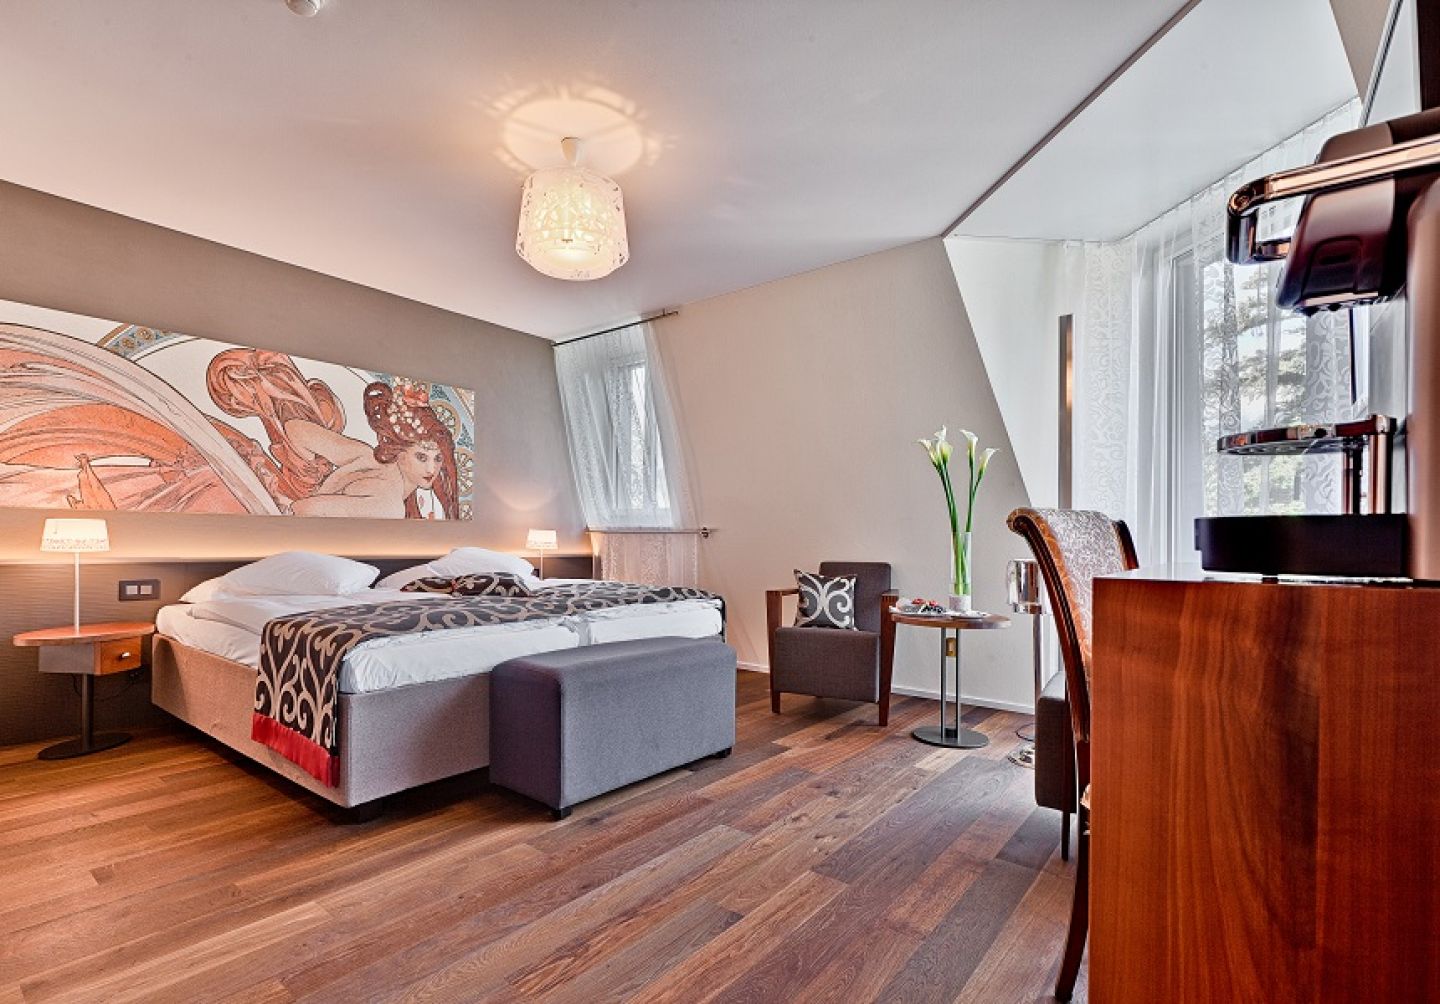 <p>Belvedere Strandhotel - Hotelzimmer - MICE Service Group</p>
<p> </p>